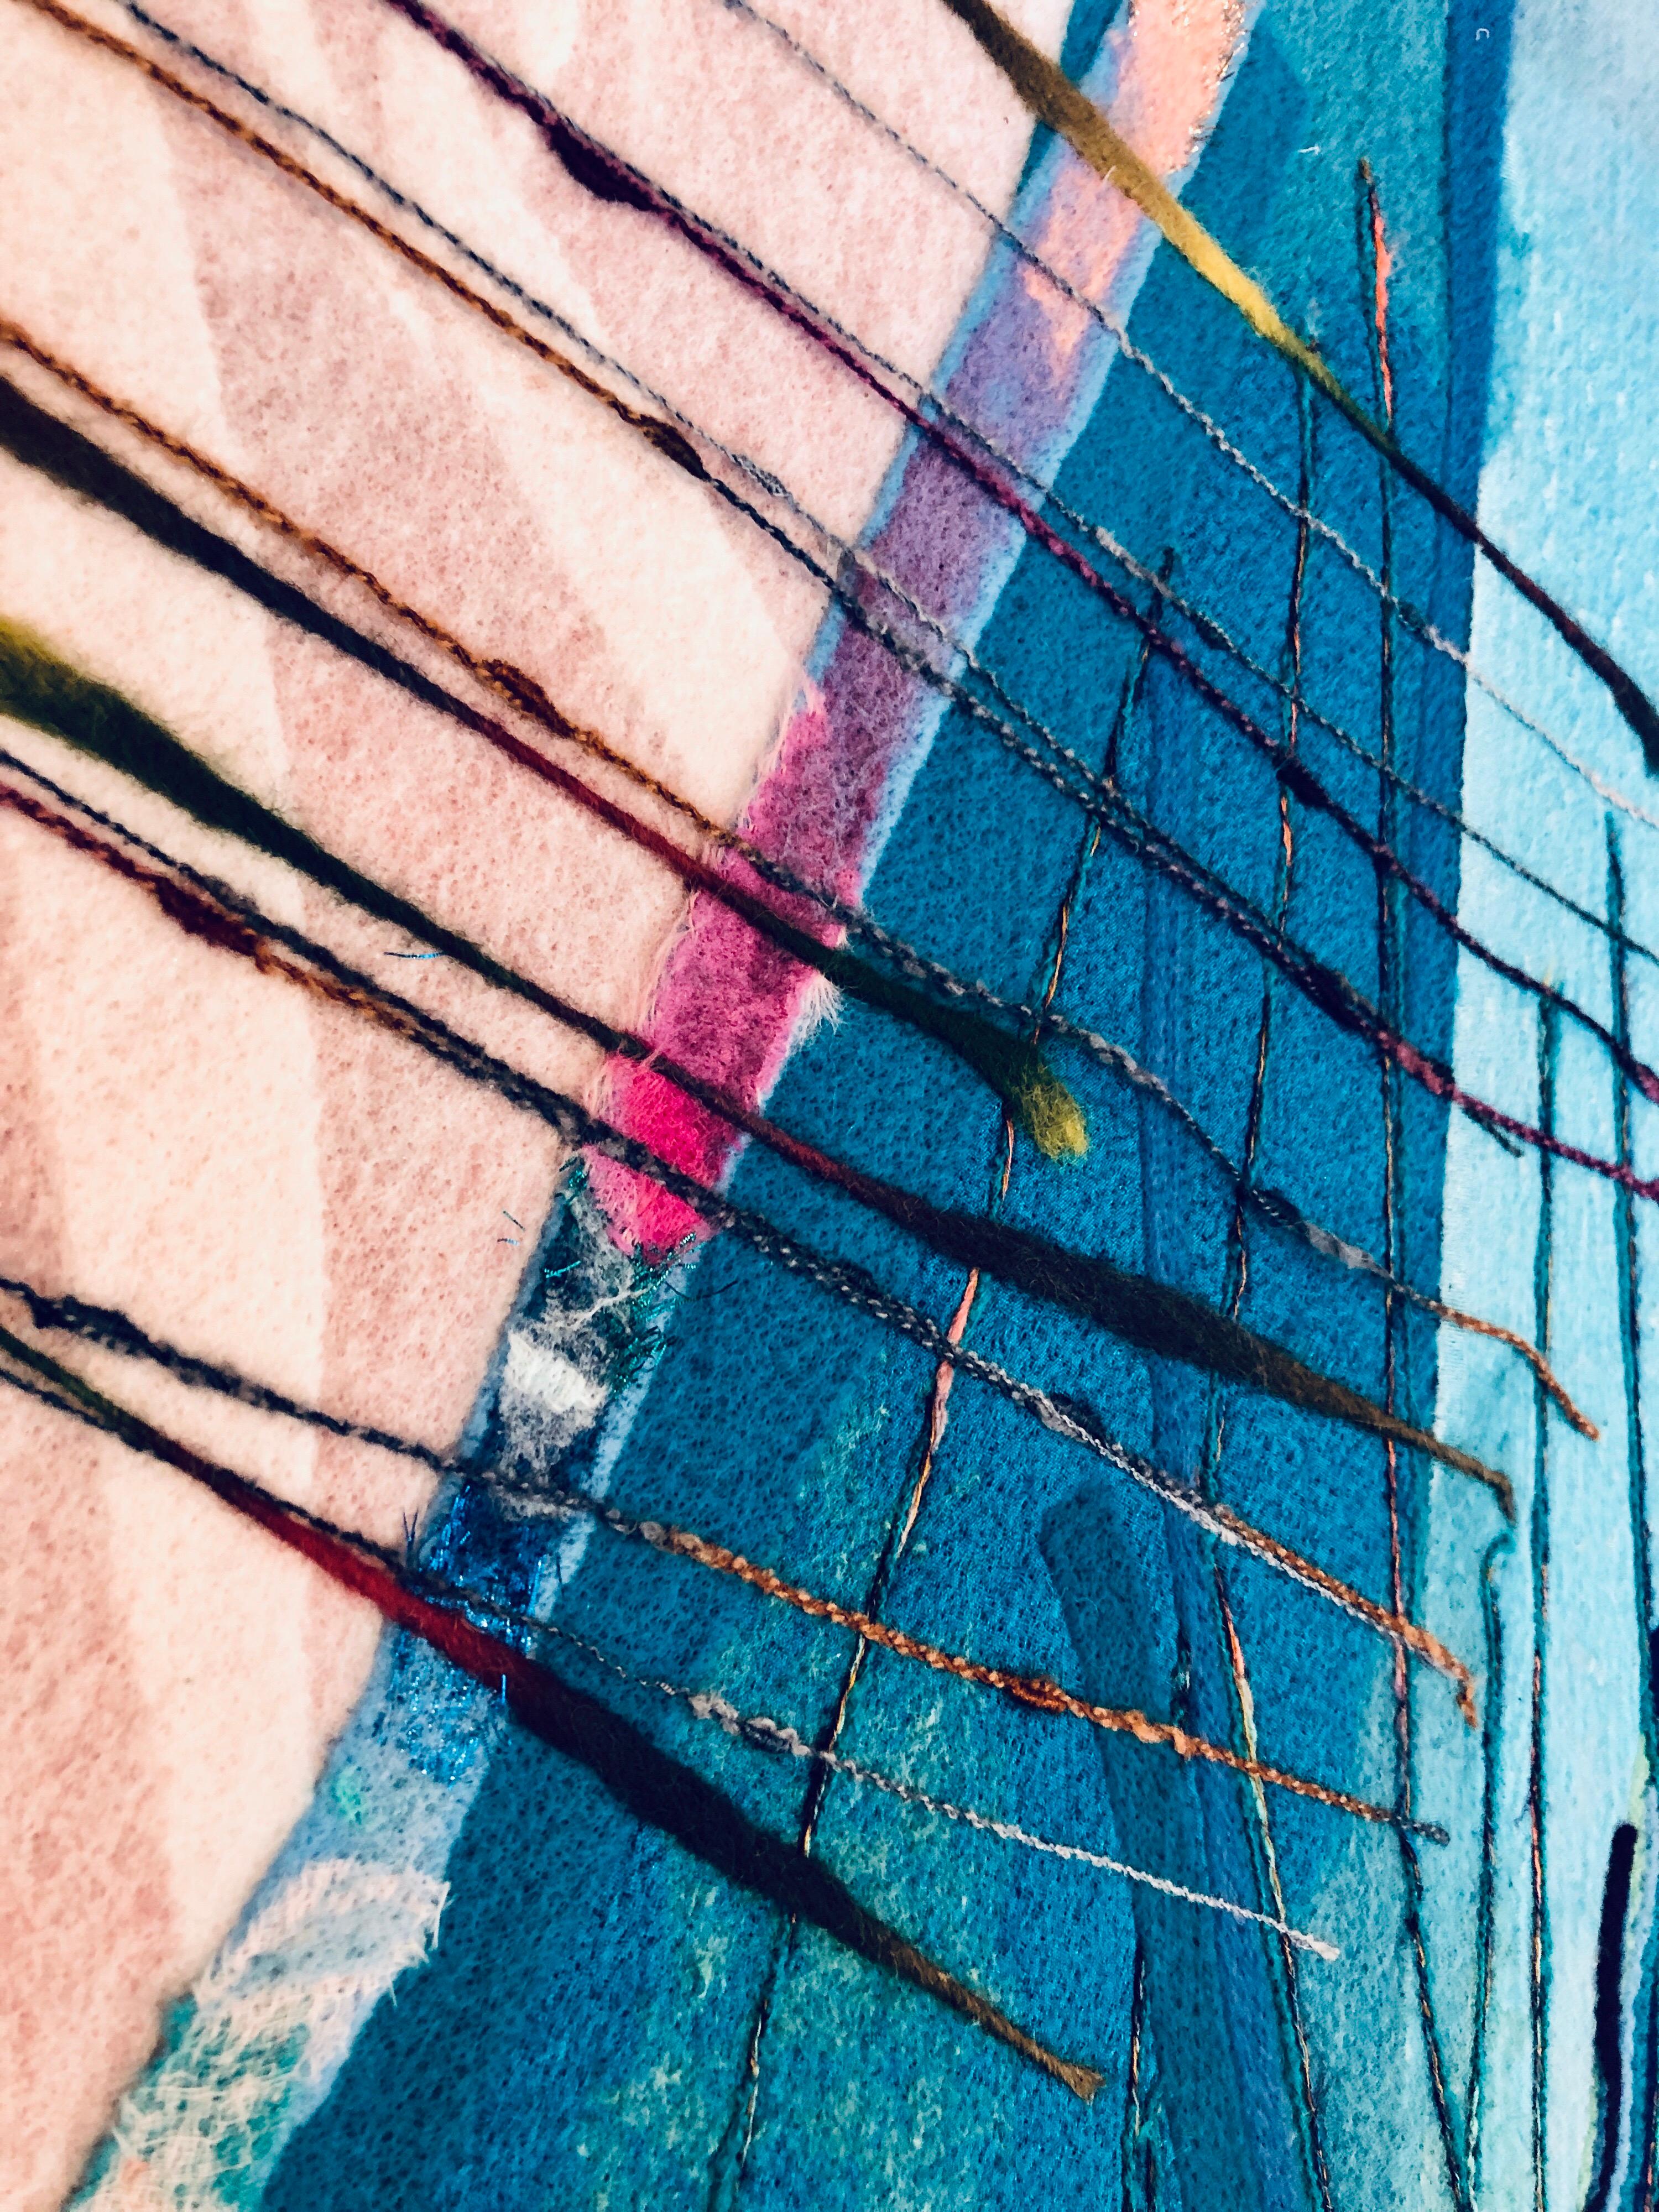 Fiber Art Collage Israeli Modernist Vibrant Colorful Tapestry Wall Hanging Rug 2